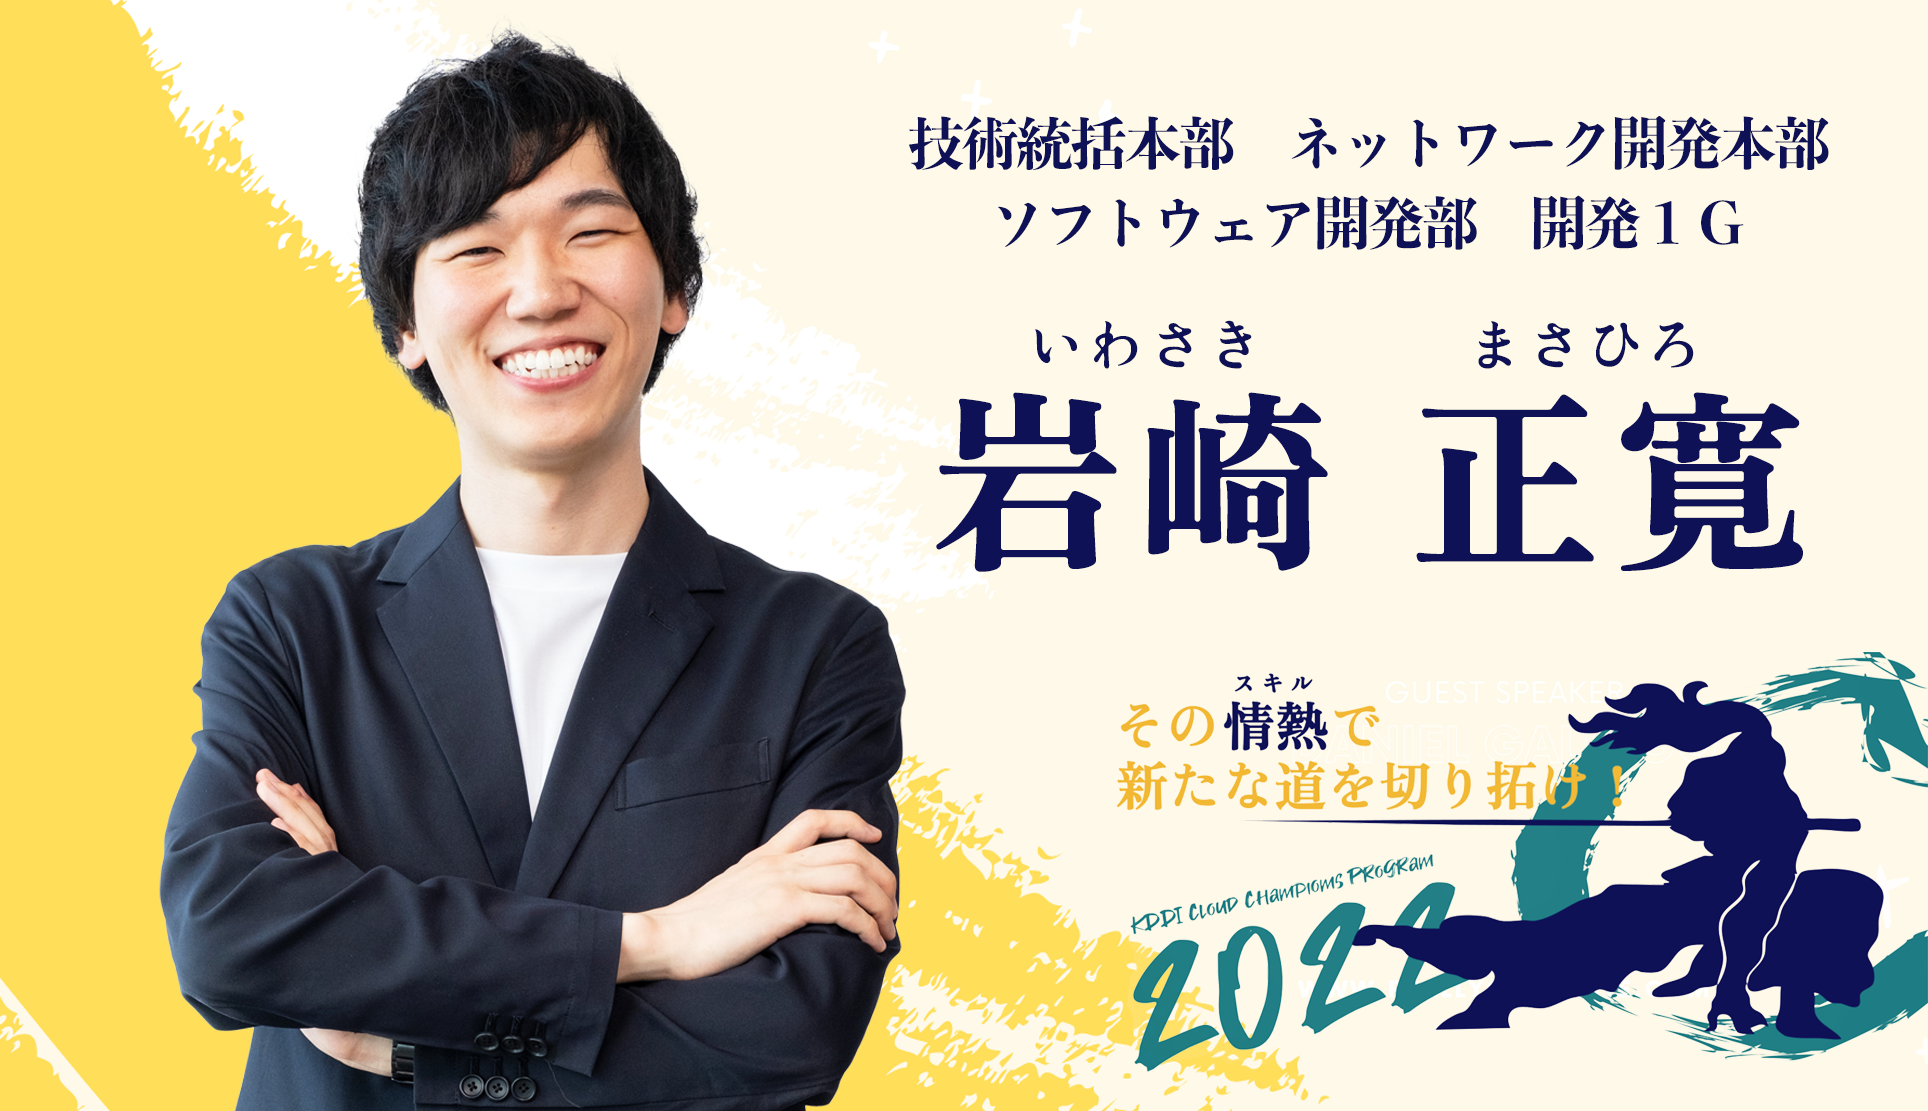 KDDI Cloud SAMURAI 2022 技術を愛する若きサムライ！　挑戦という真剣で新時代を切り拓け！